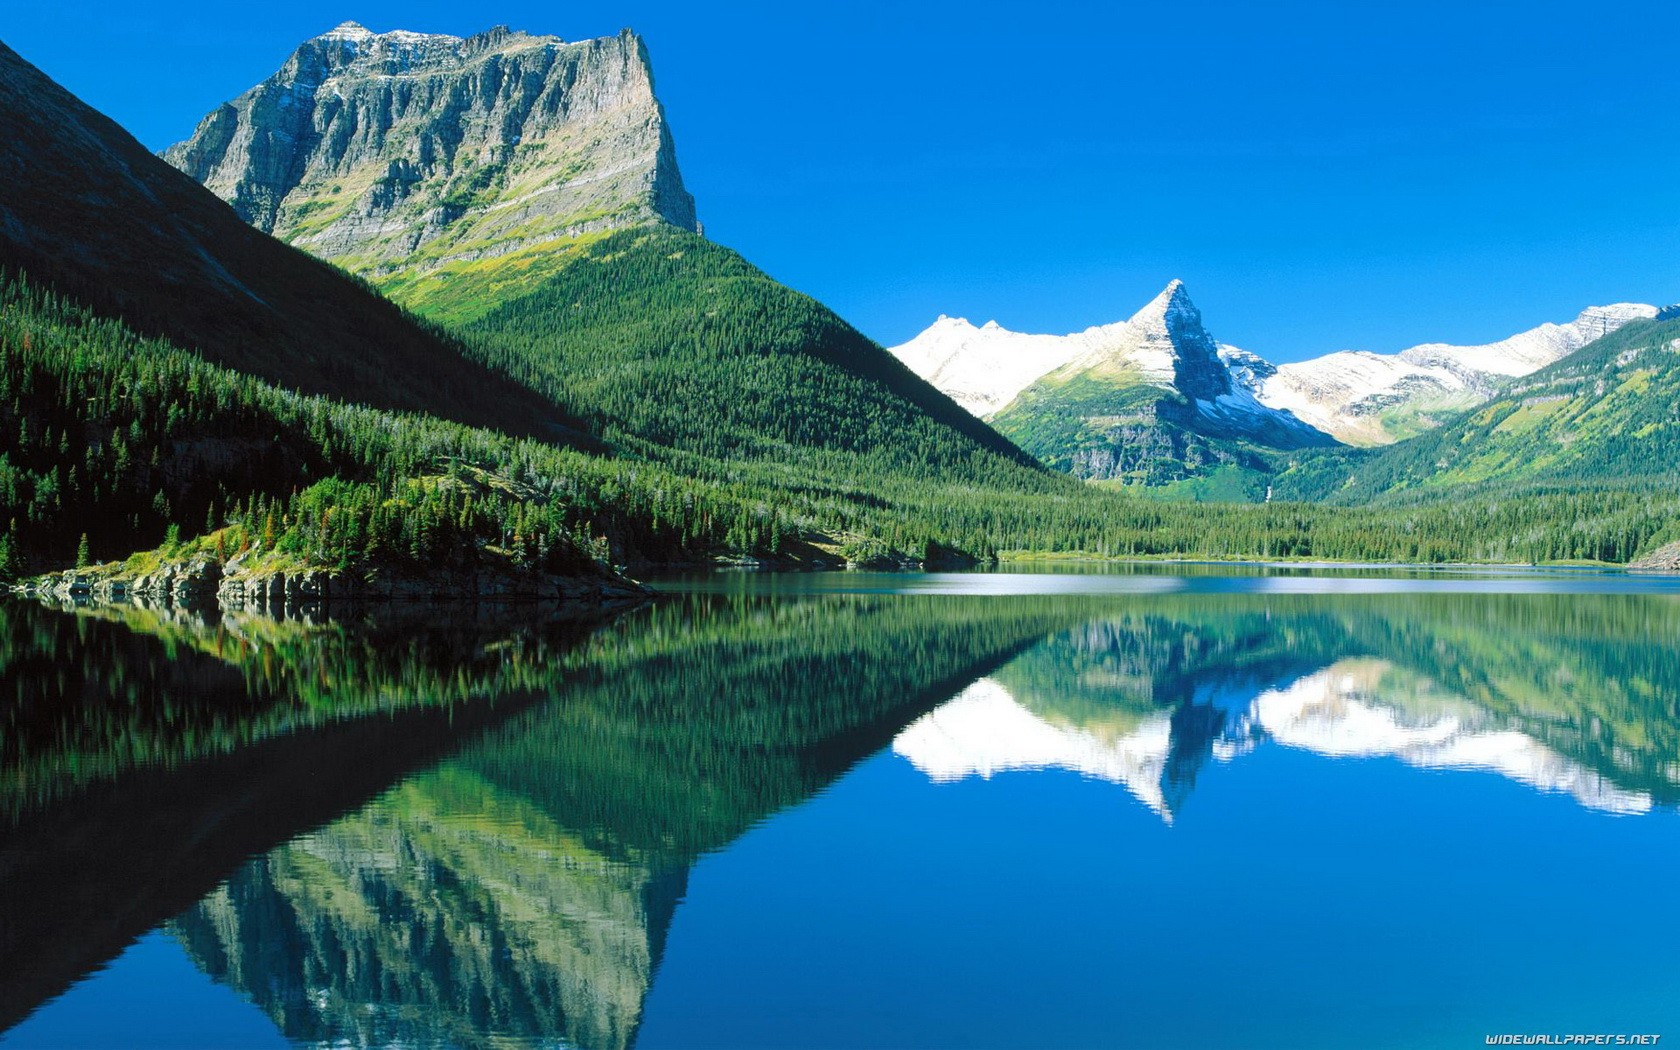 General 1680x1050 landscape Glacier National Park national park Montana lake mountains reflection USA rocks water